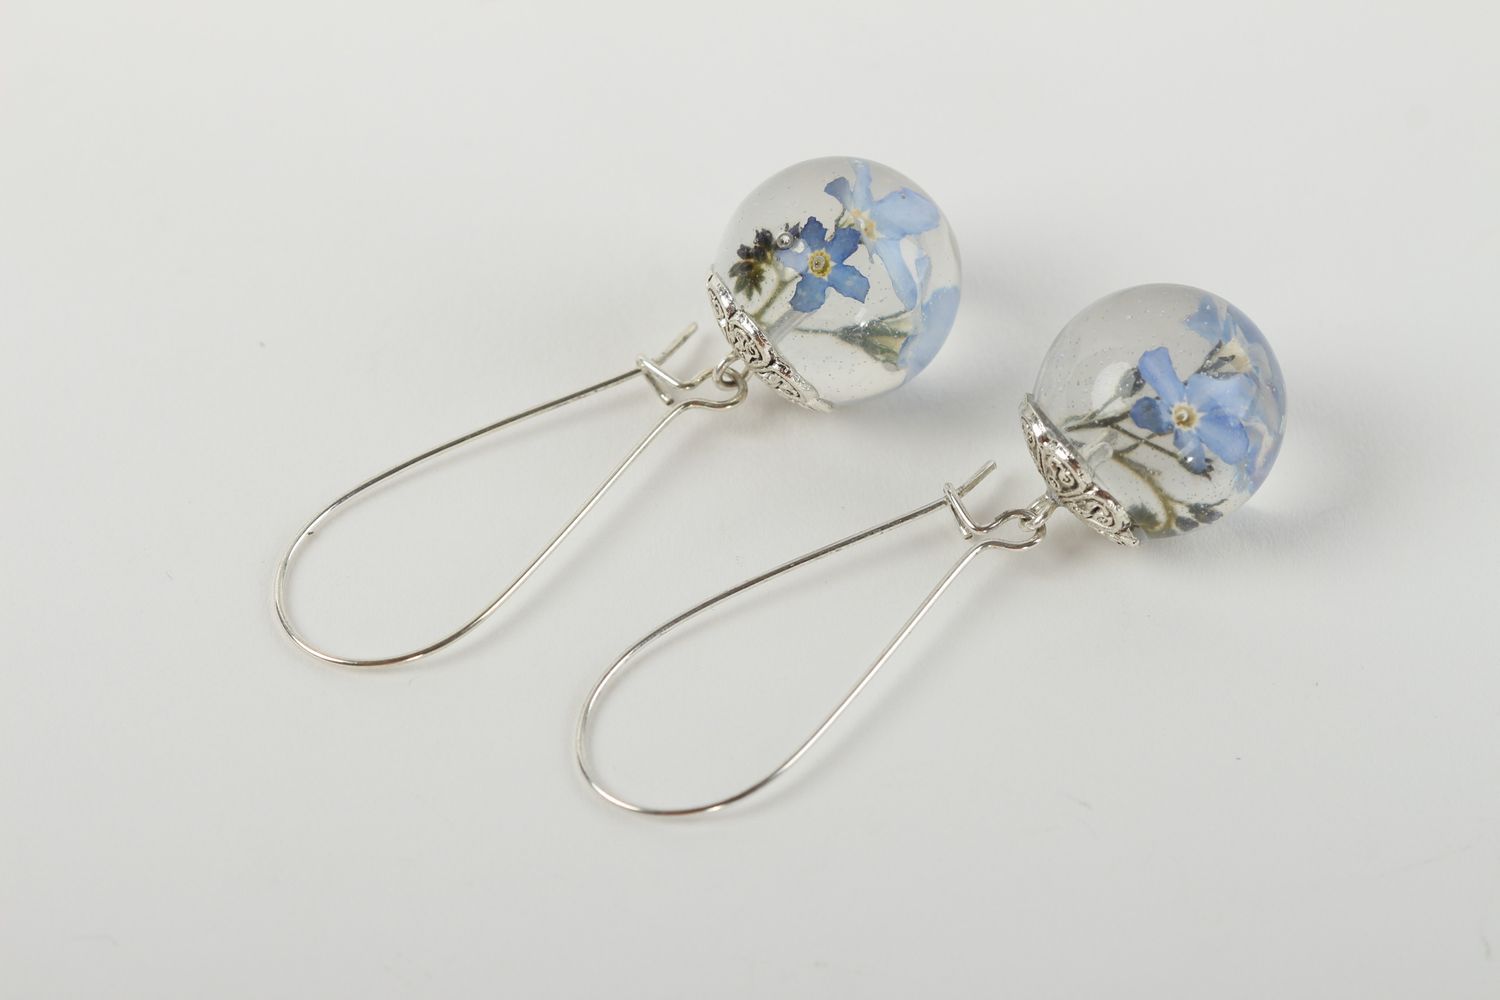 Botanic earrings handmade stylish earrings with charms earrings with flowers photo 4